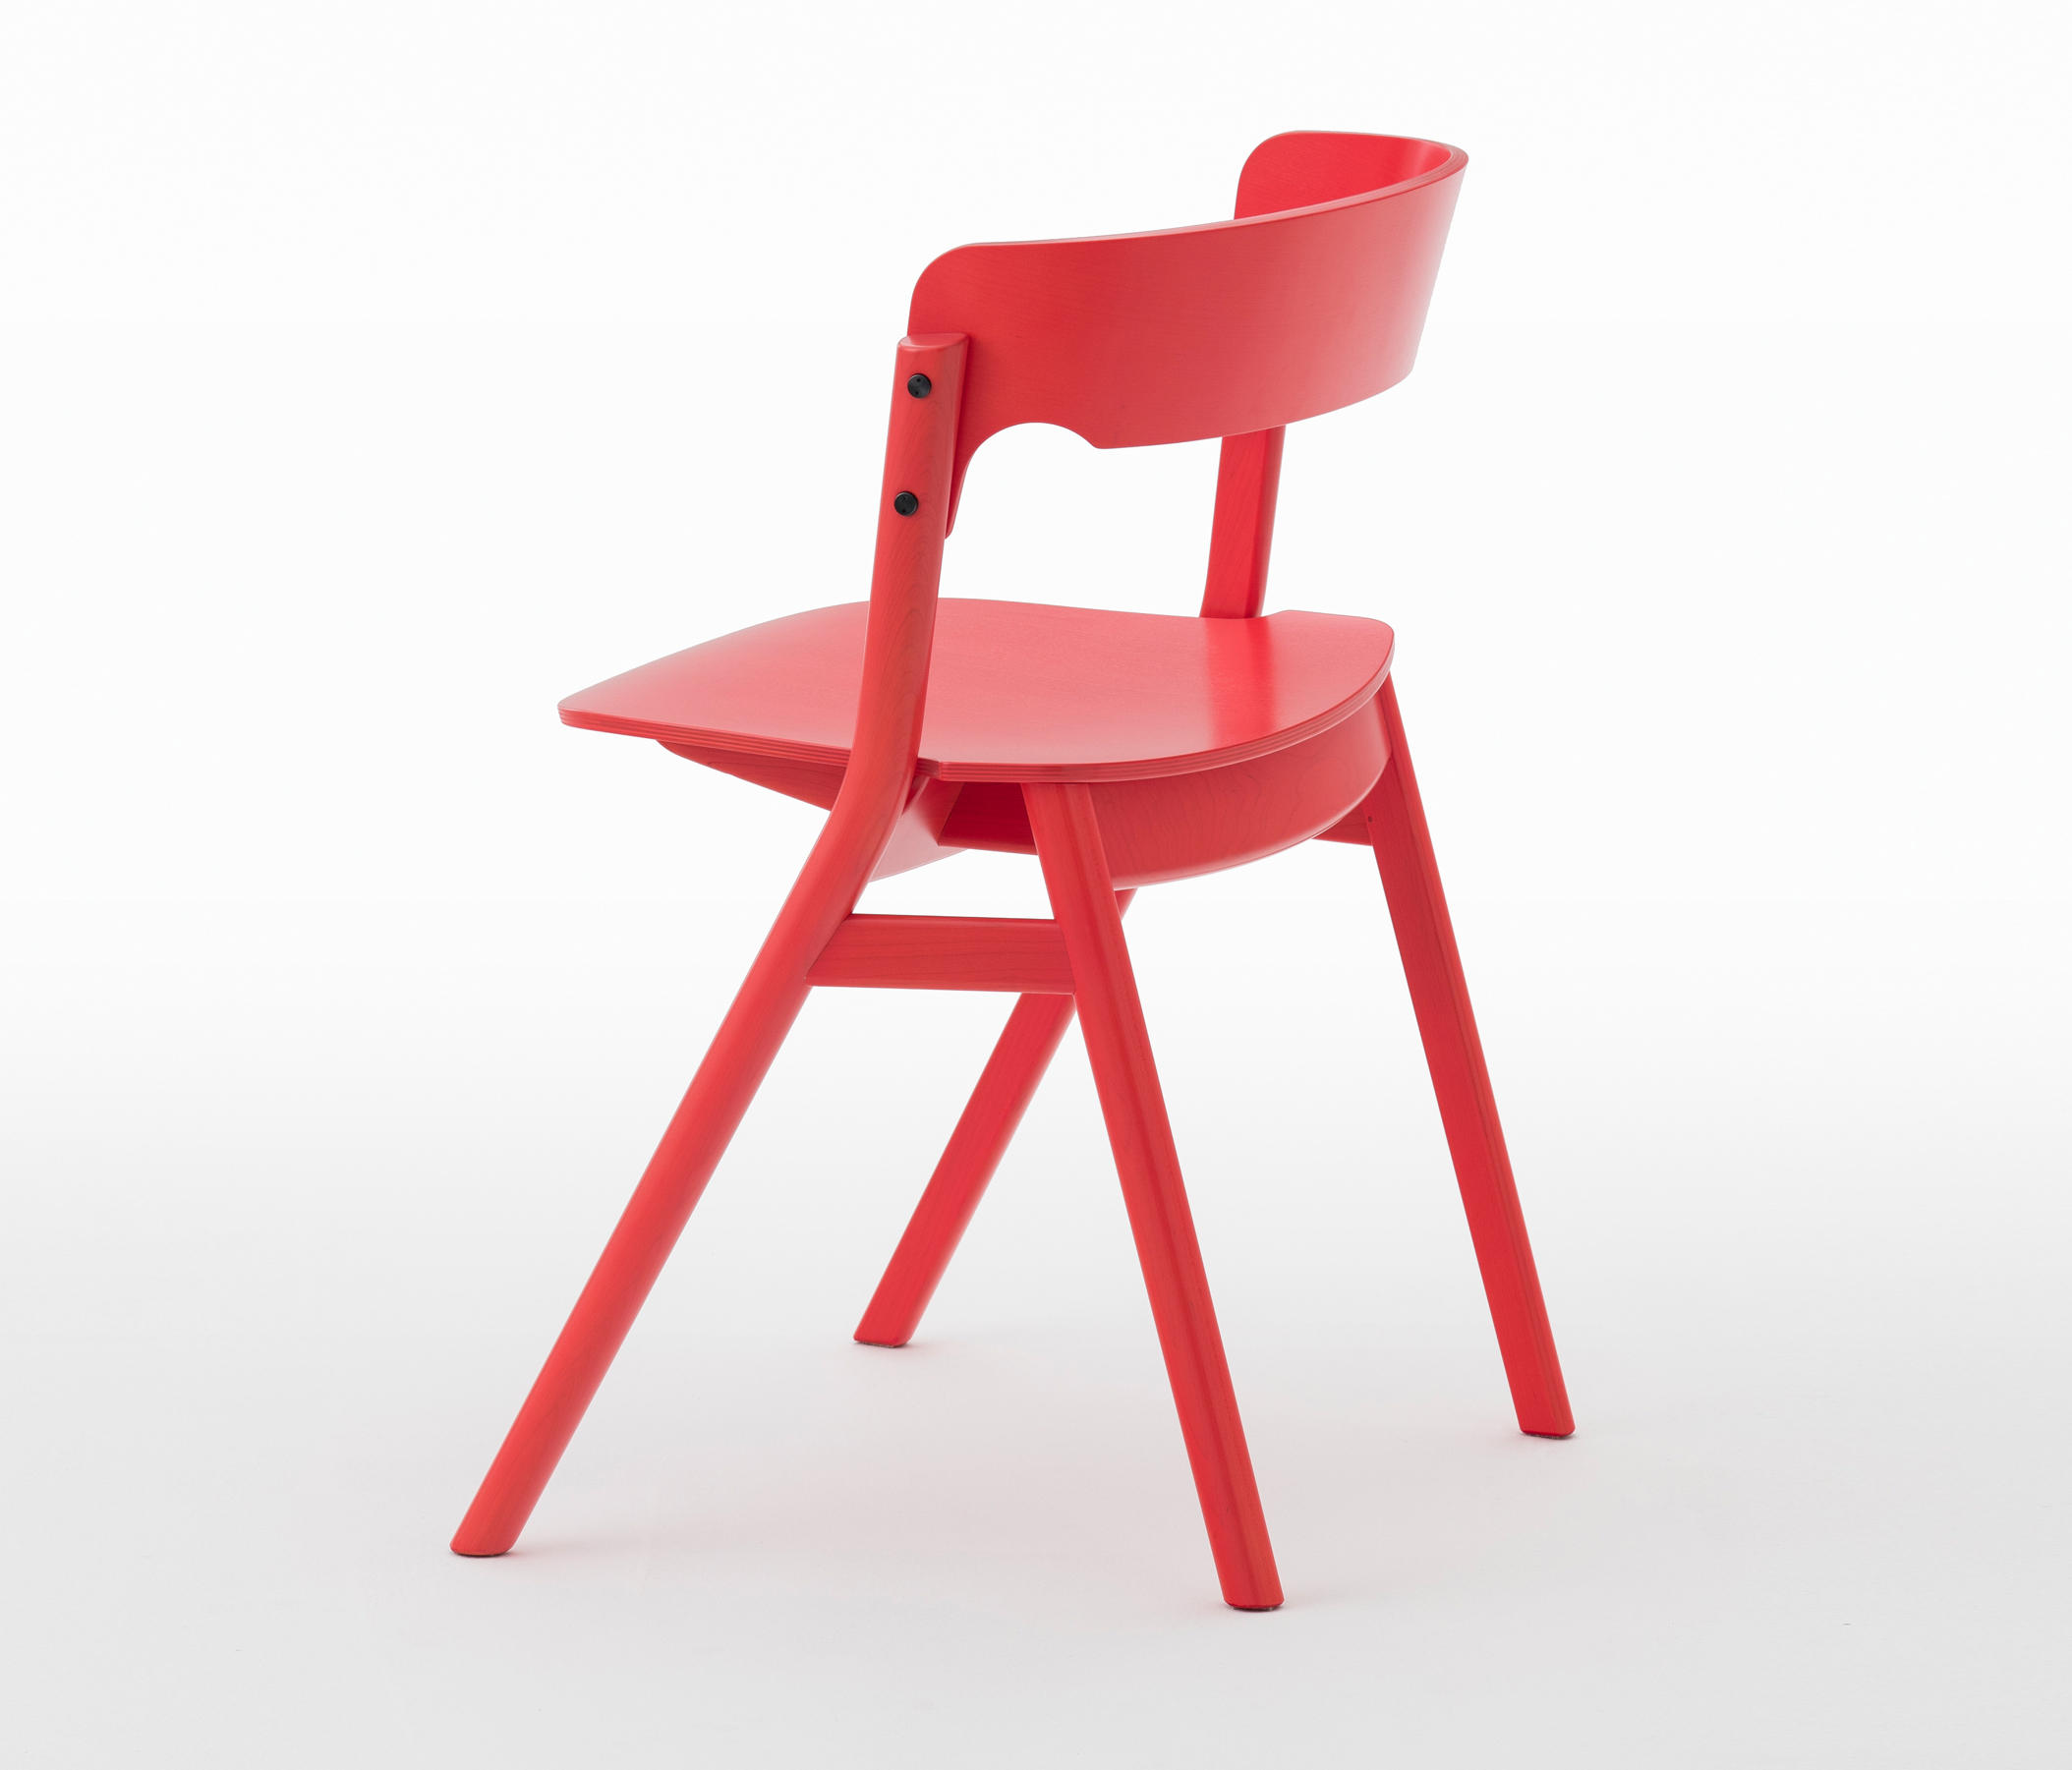 Дизайнерские стулья тонкой опоре. Стулья Red Apple\. Стул Red Apple r465. Sally may